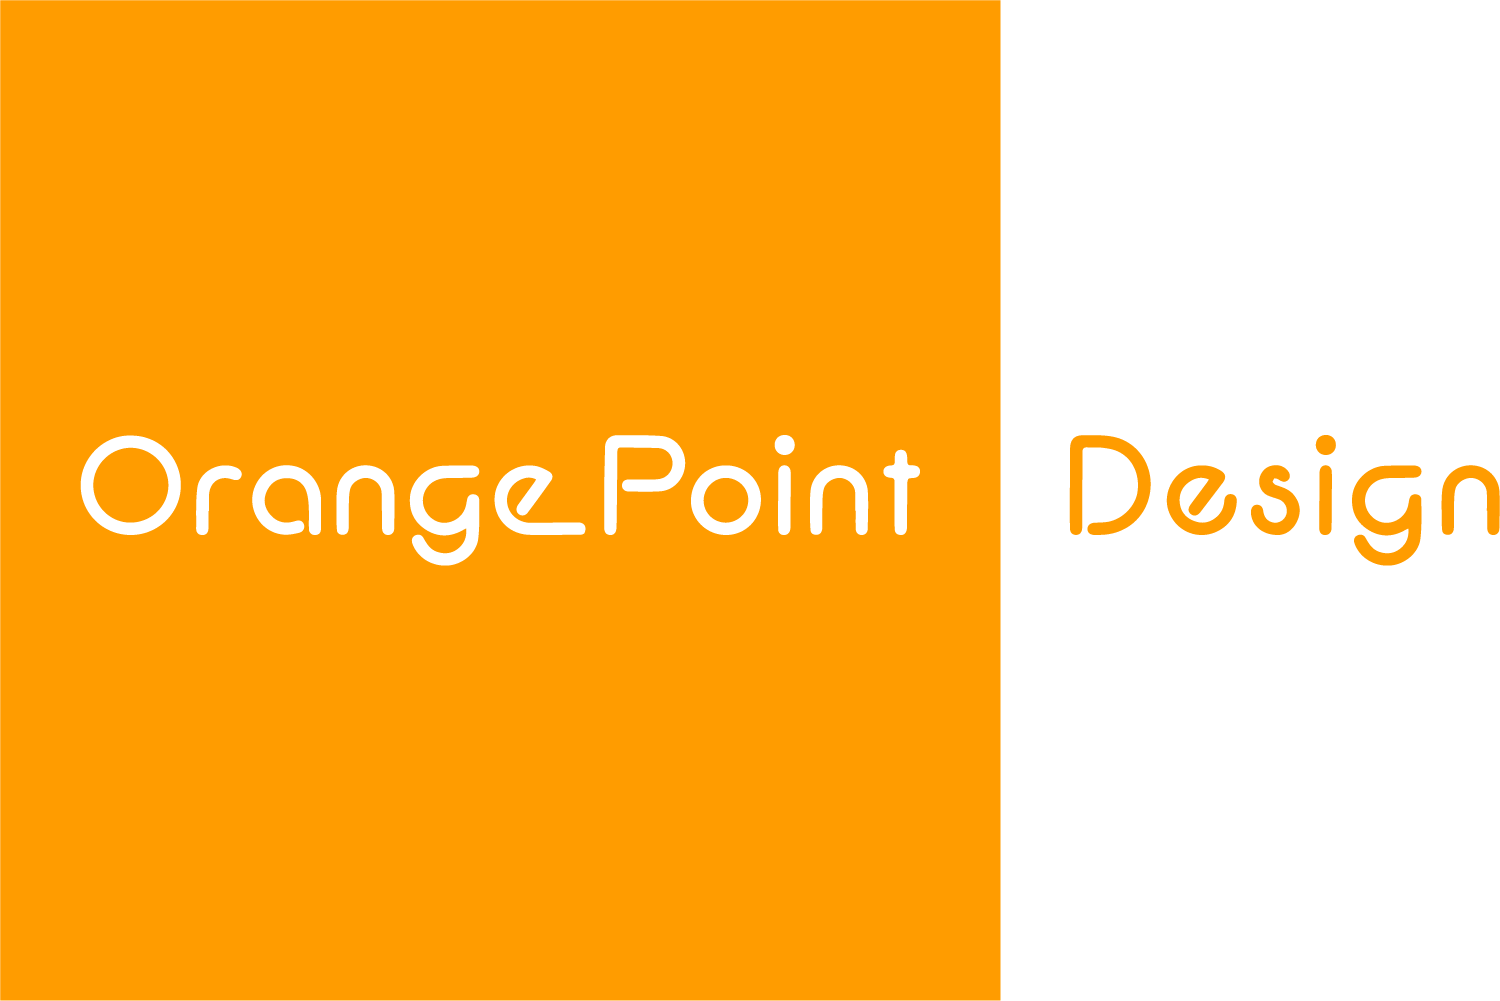 orangepointdesign: Presentation Design